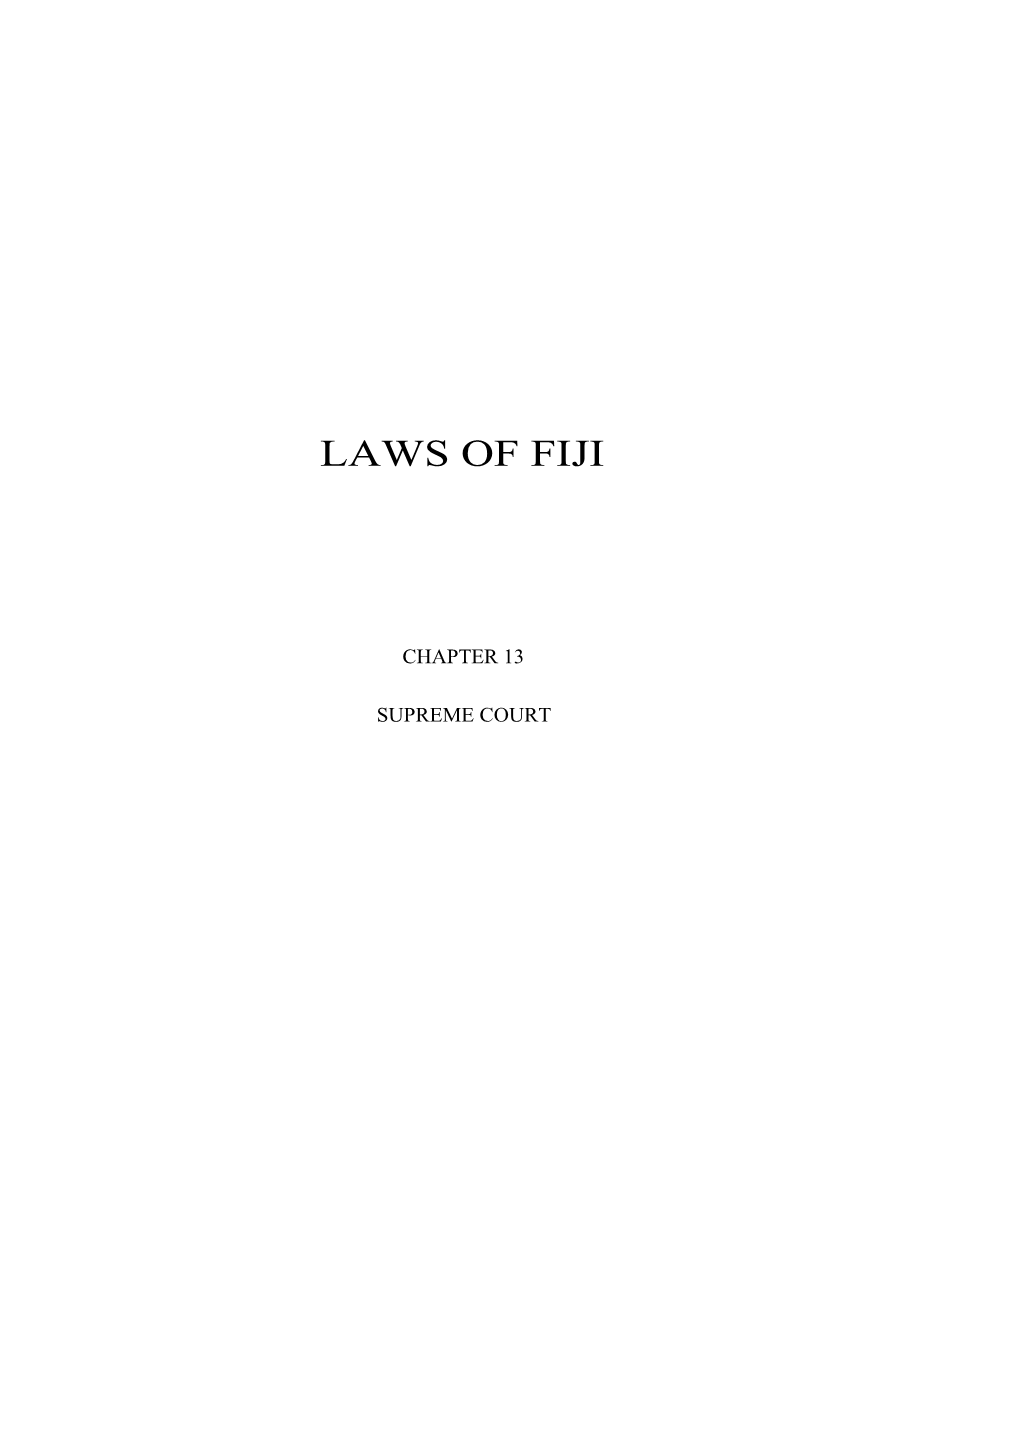 Laws of Fiji